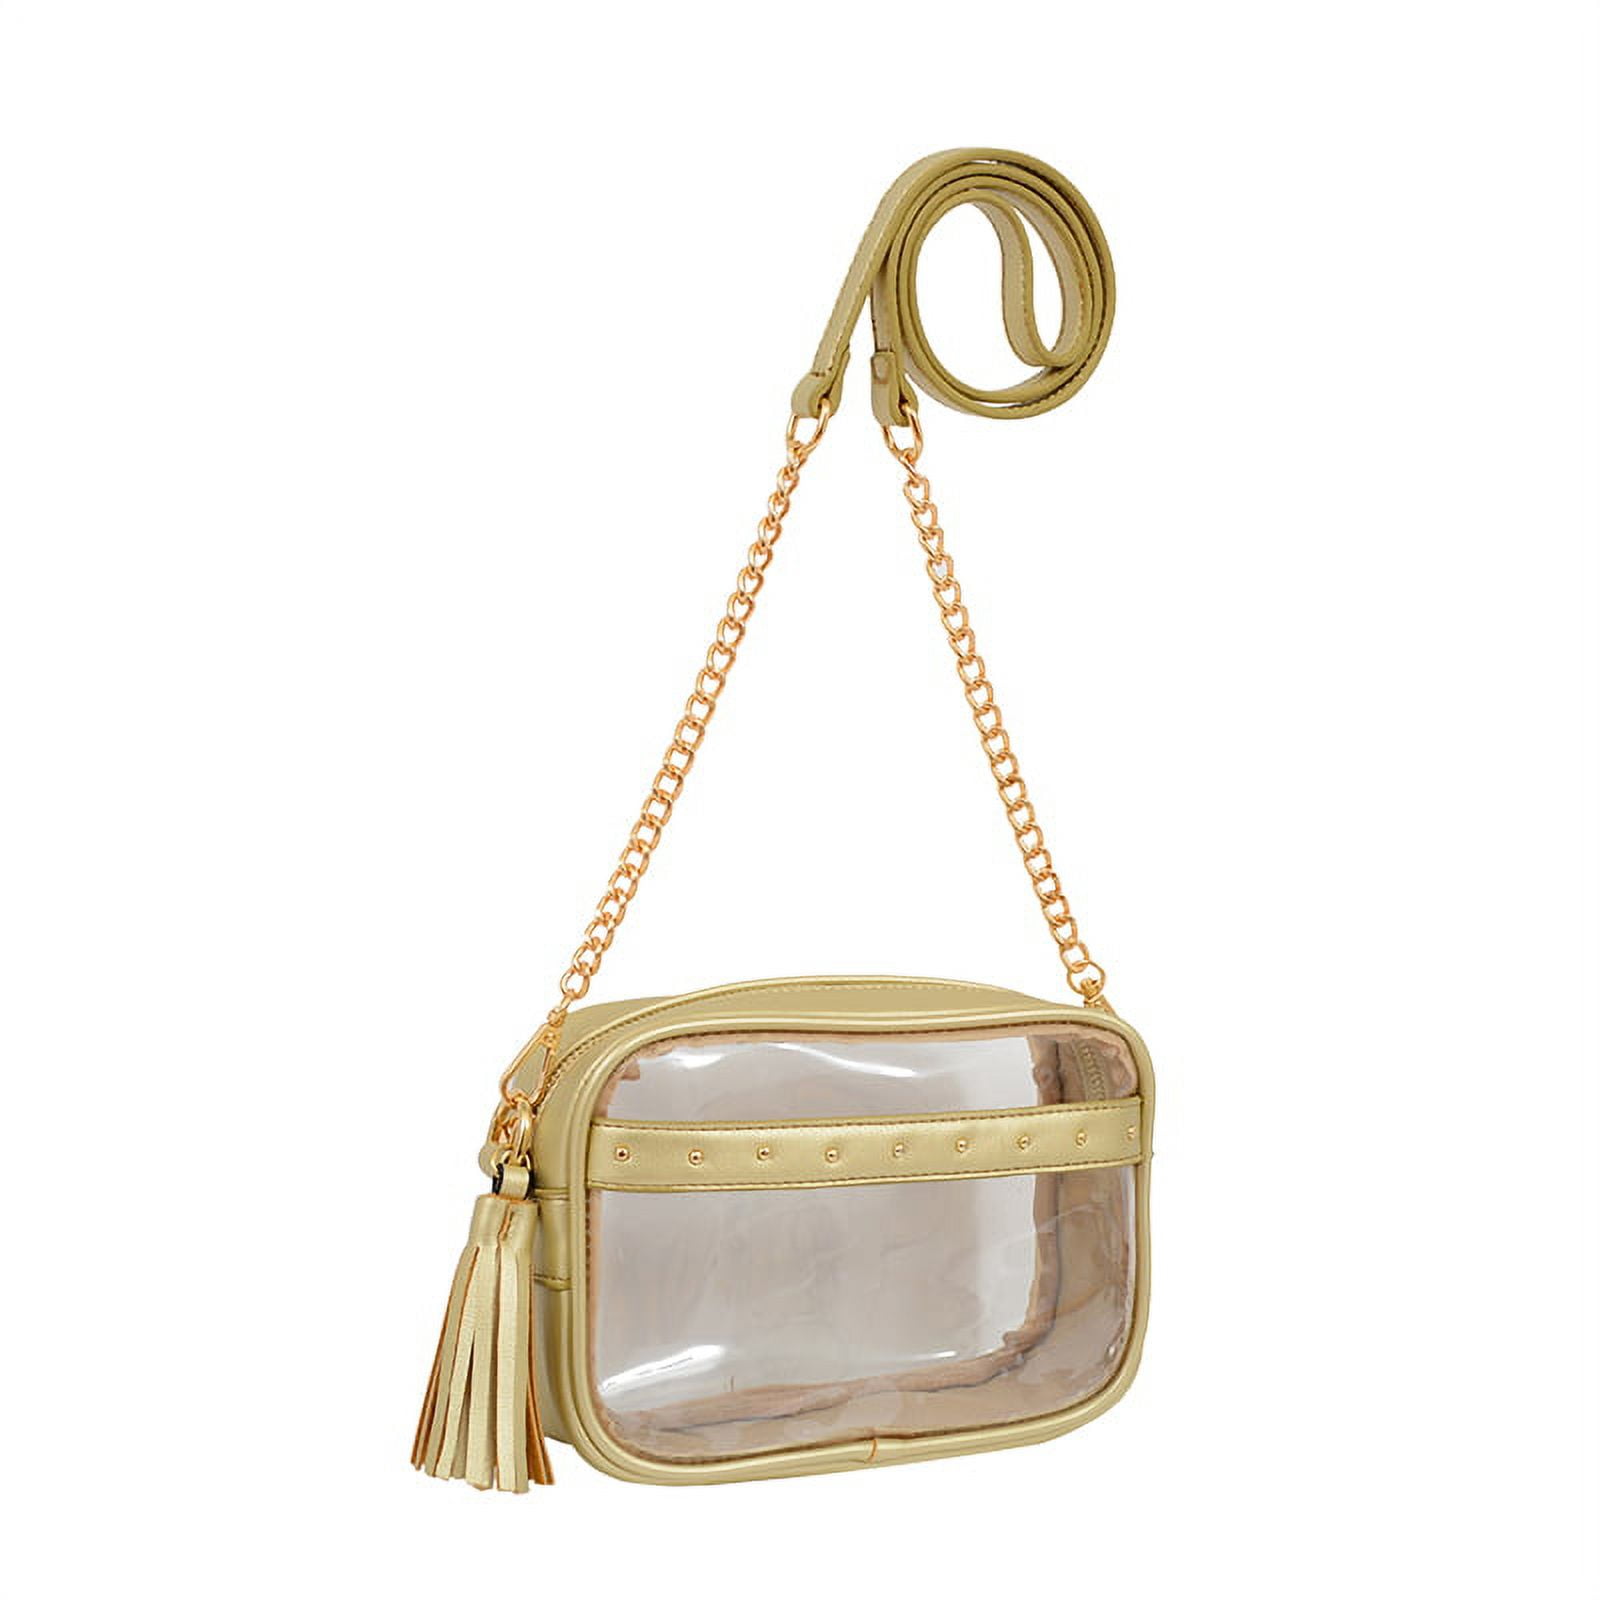 Clear Purse | Clear purses, Purses, Gold bag